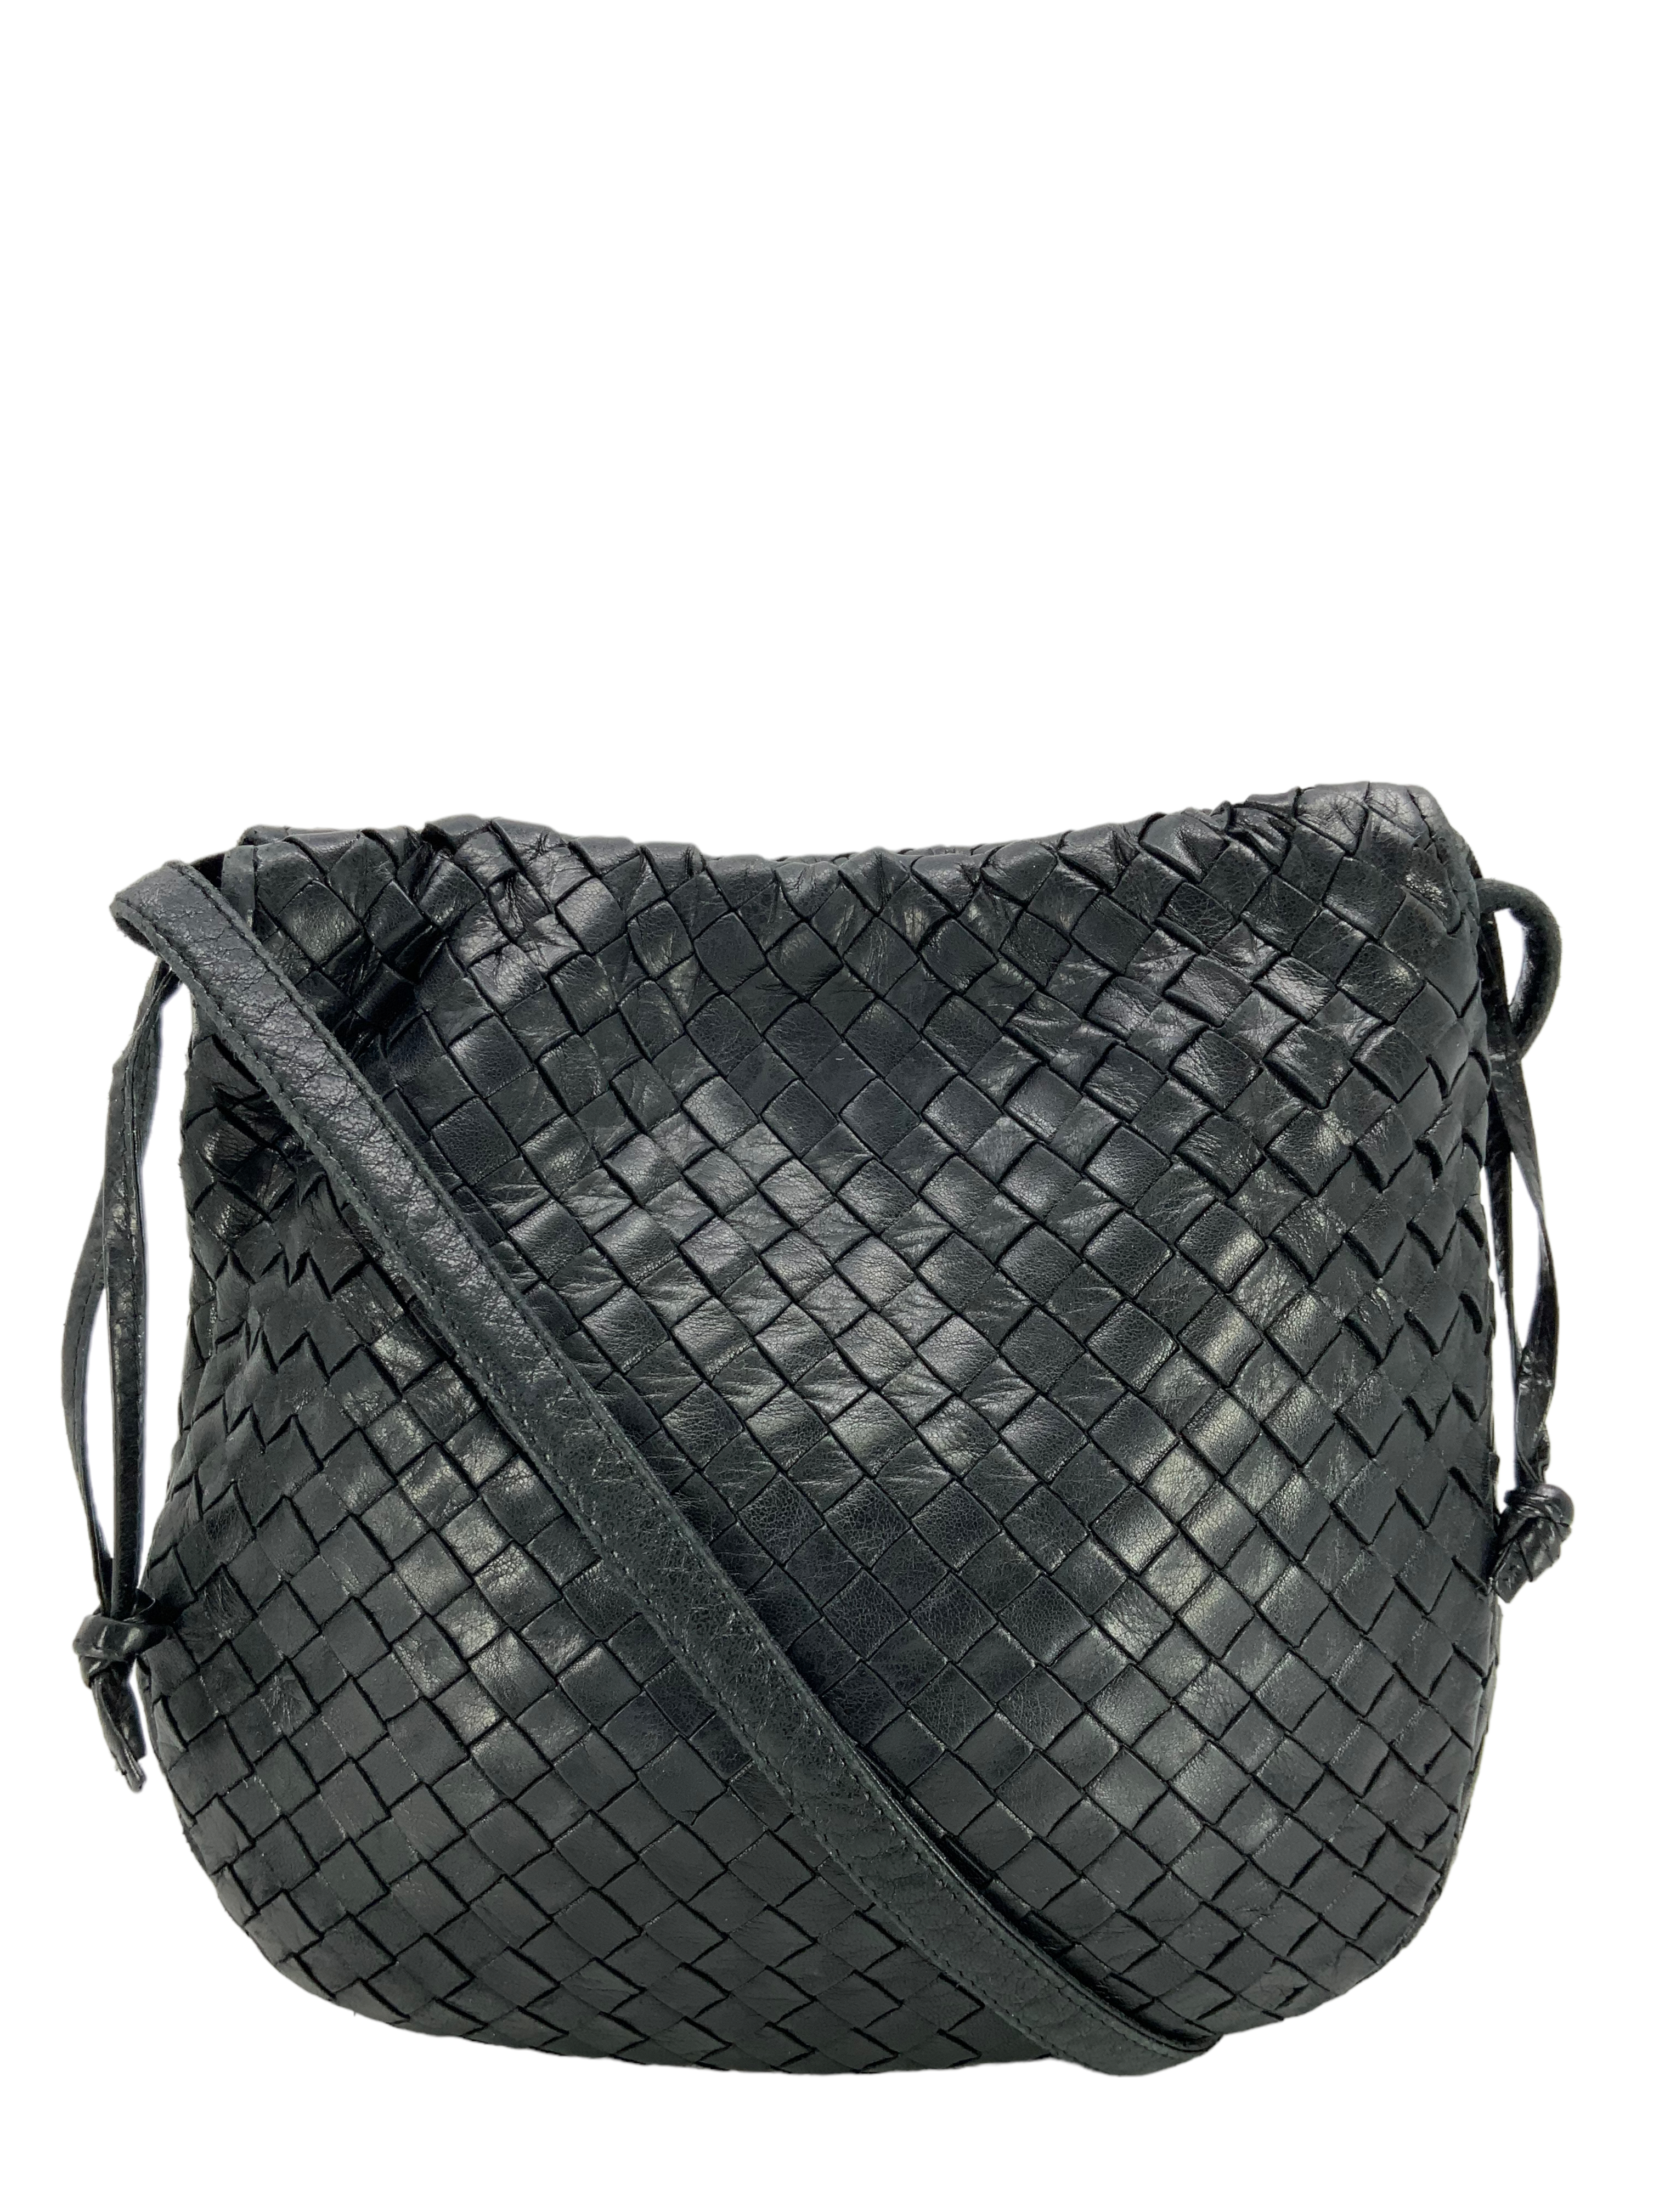 Bottega Veneta Vintage Intrecciato Leather Hobo Bag - Consigned Designs